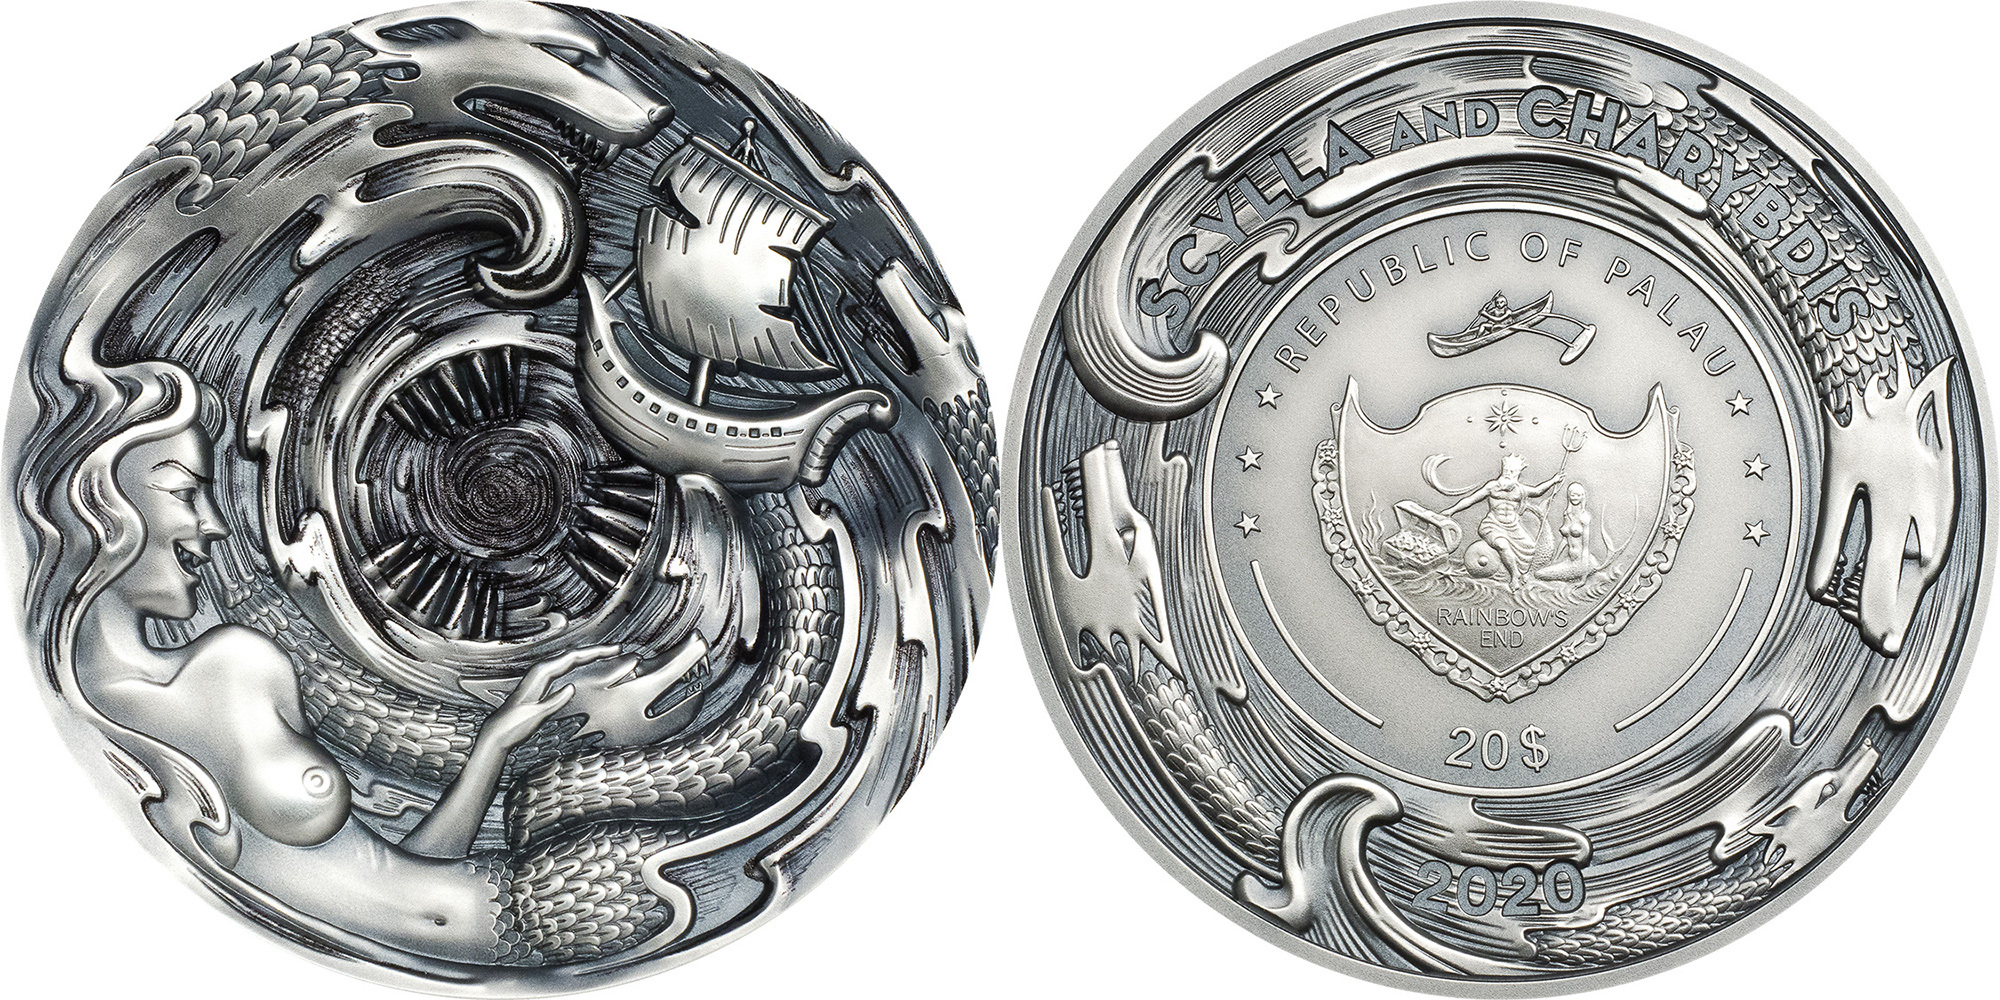 Mnt монета. Серебряная монета. Серебряная Монетка. Красивые серебряные монеты. Самые красивые серебряные монеты.